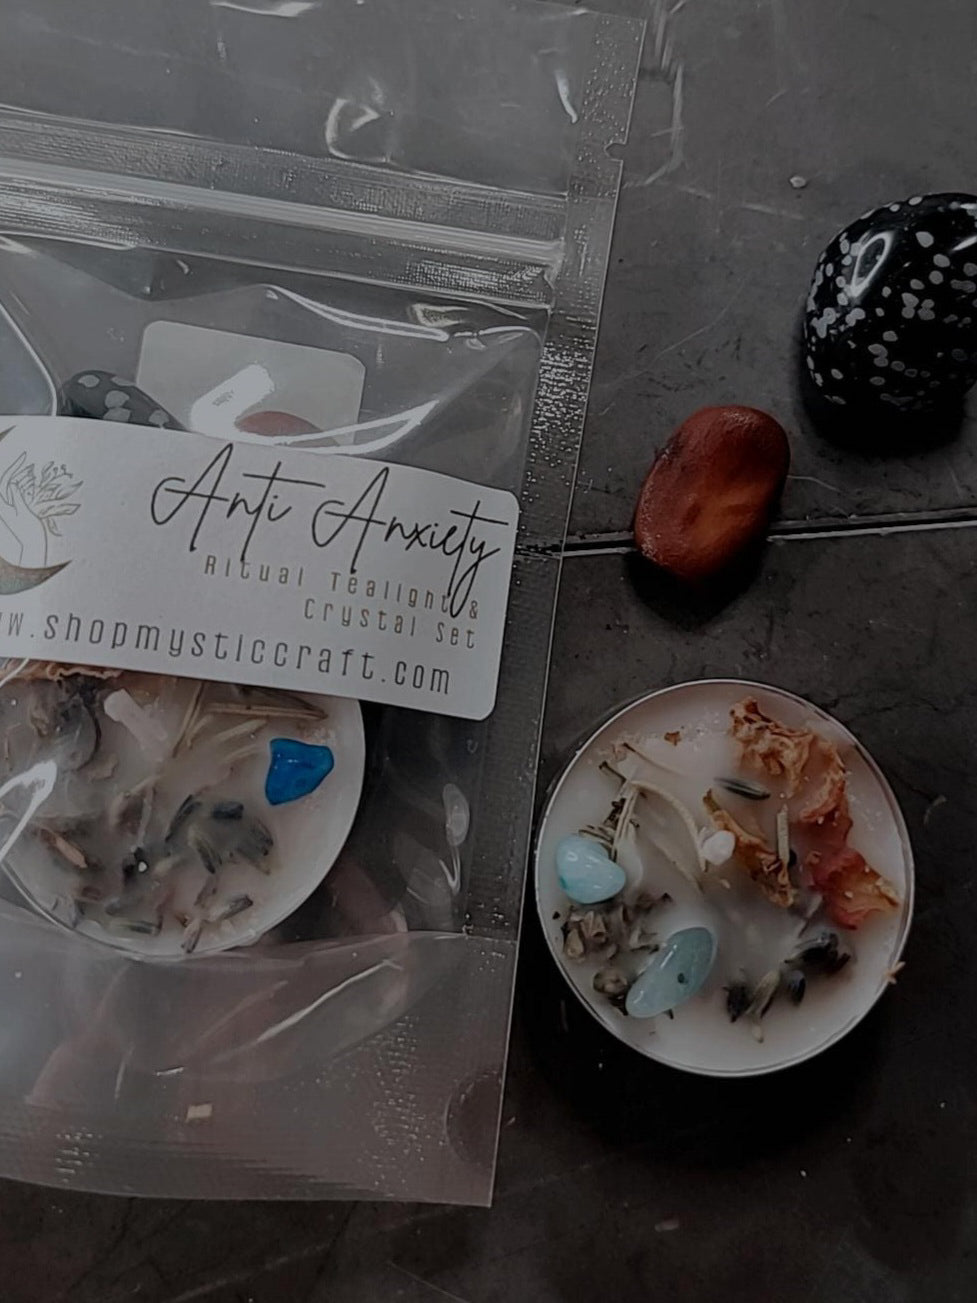 Anti Anxiety Ritual Tealight & Crystal Set